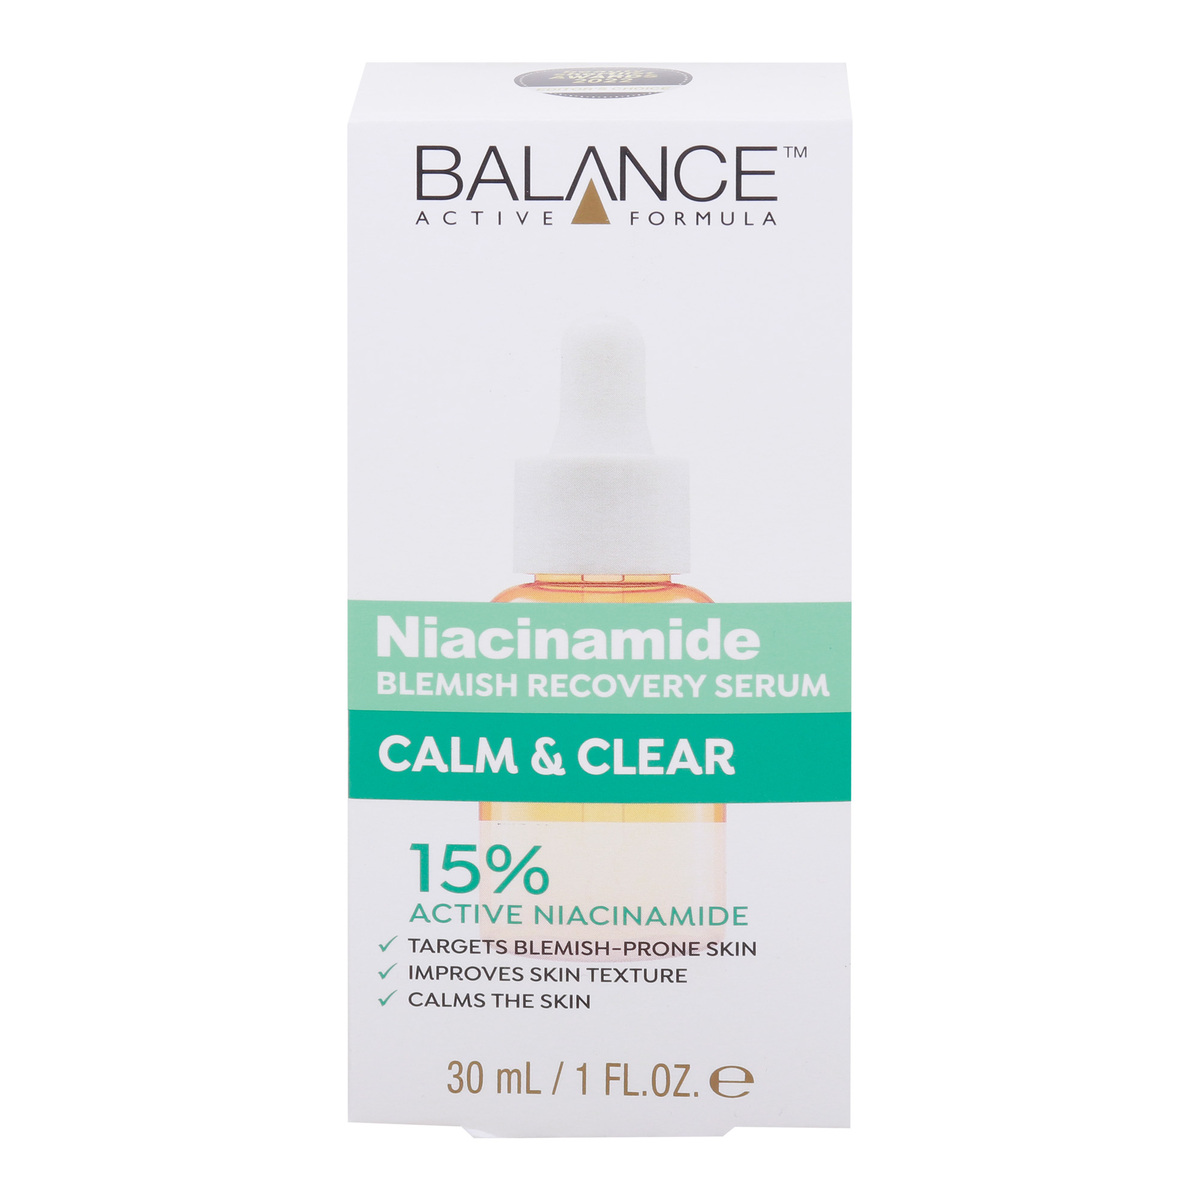 Balance Active Formula Niacinamide Blemish Recovery Serum 30 ml